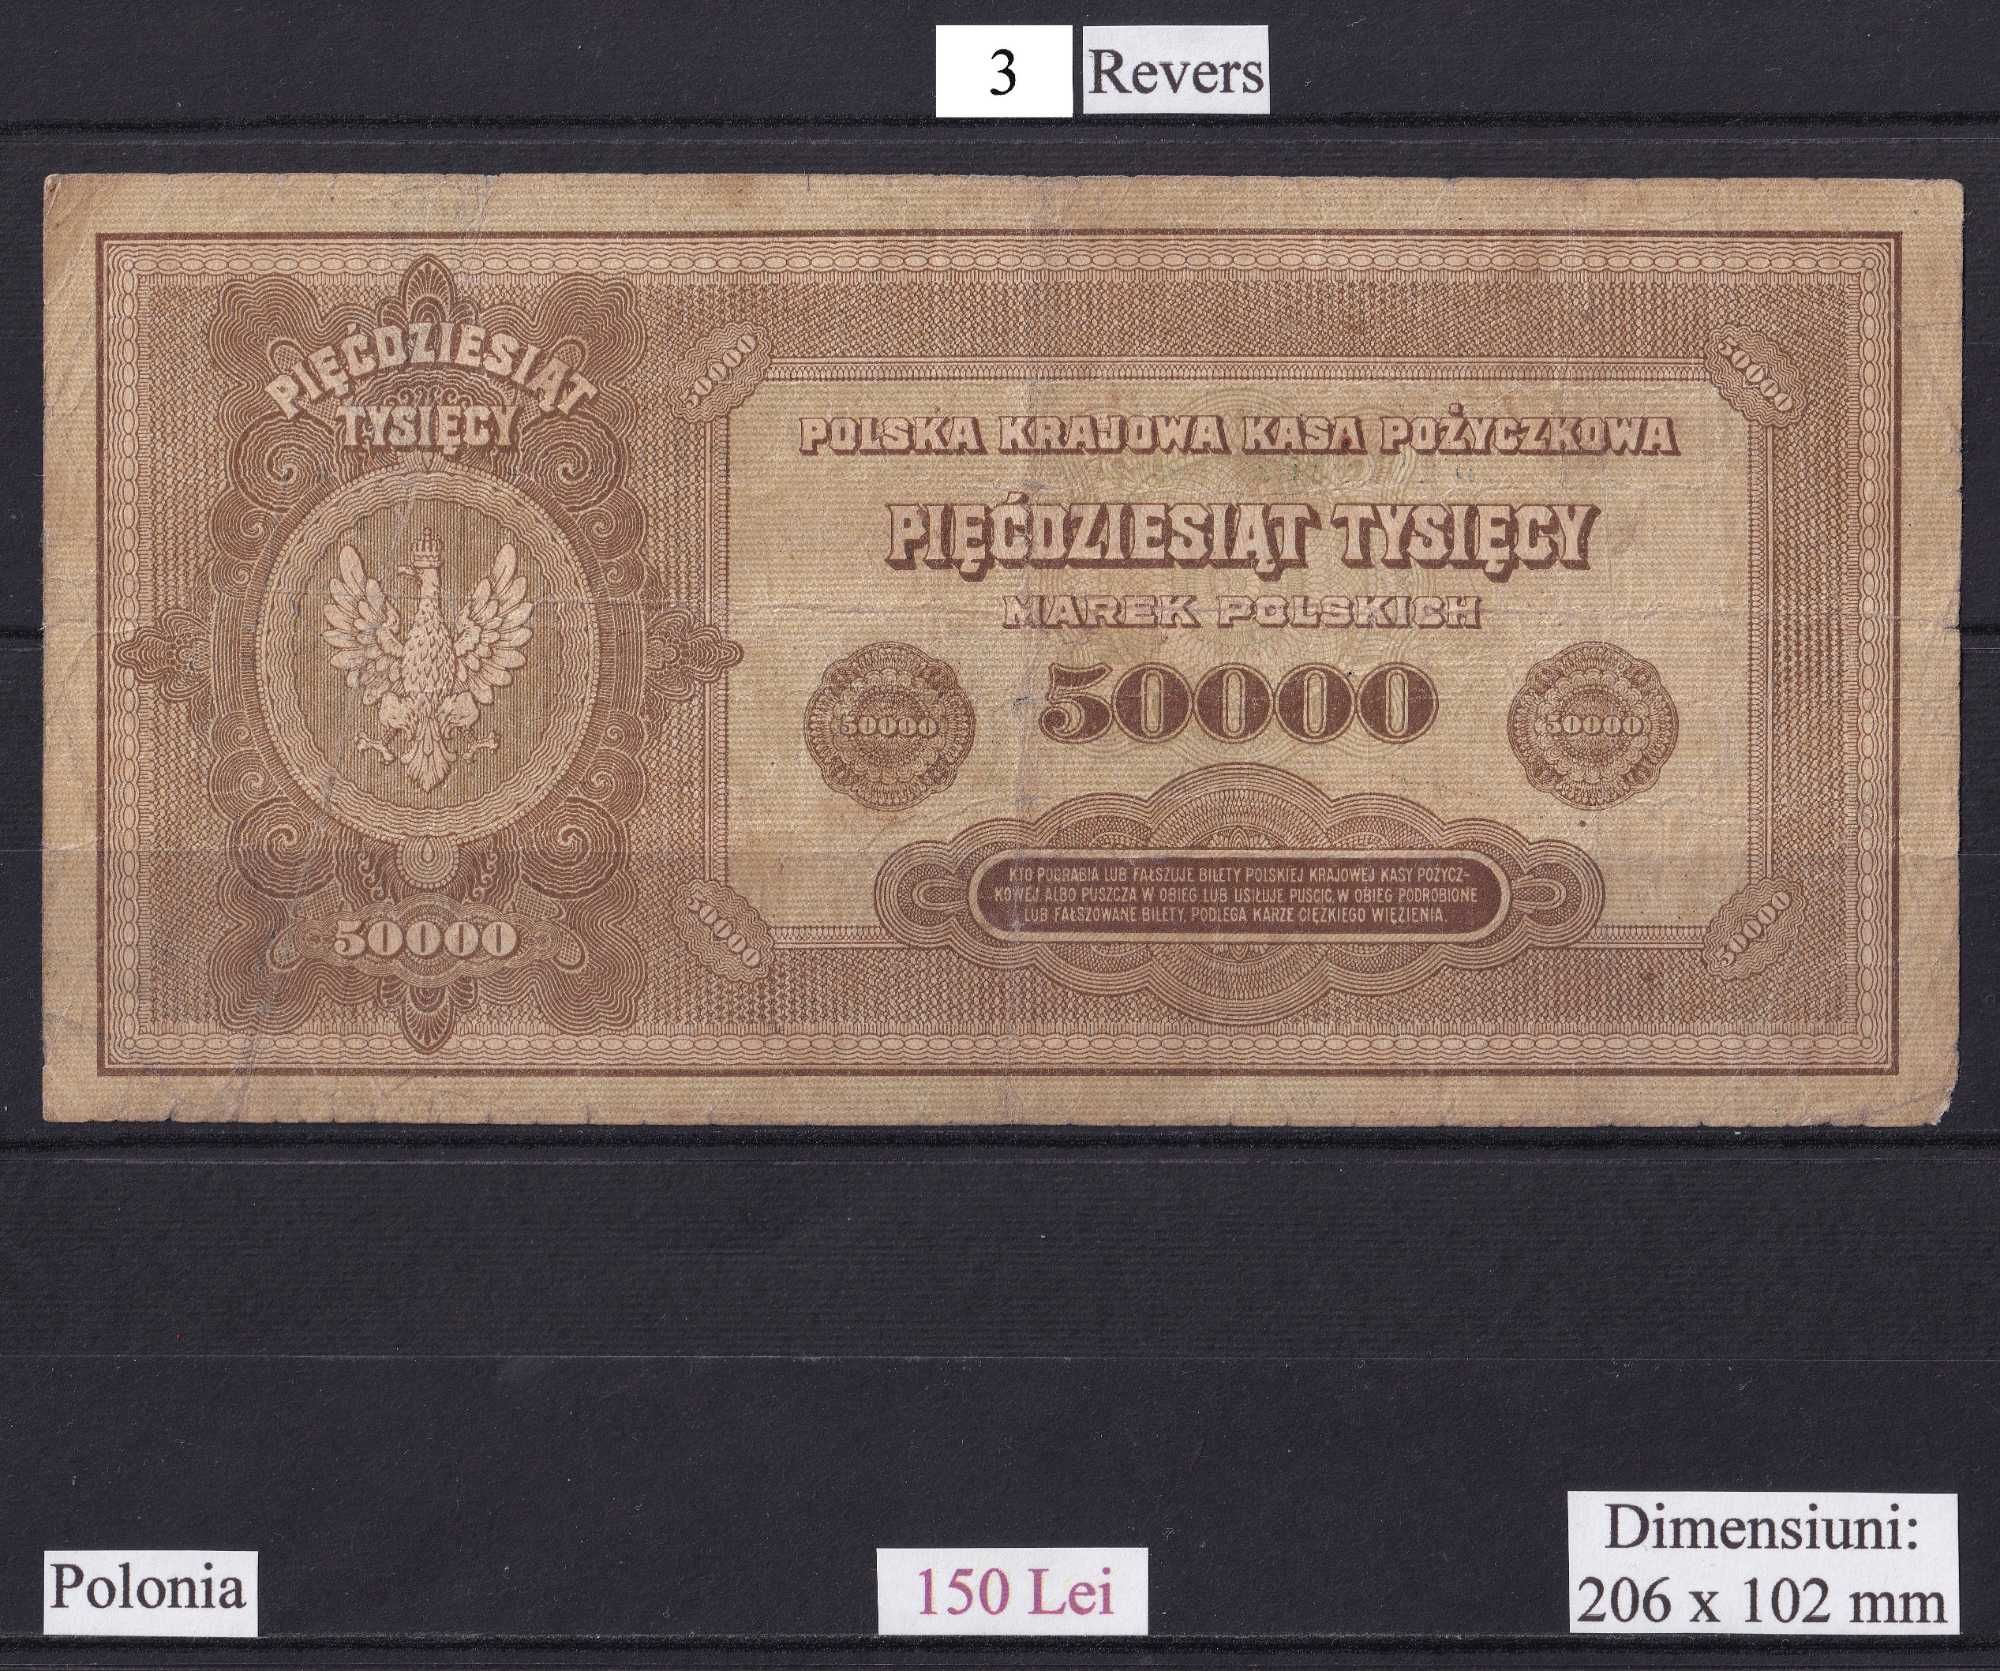 Bancnote foarte vechi Germania si Polonia.